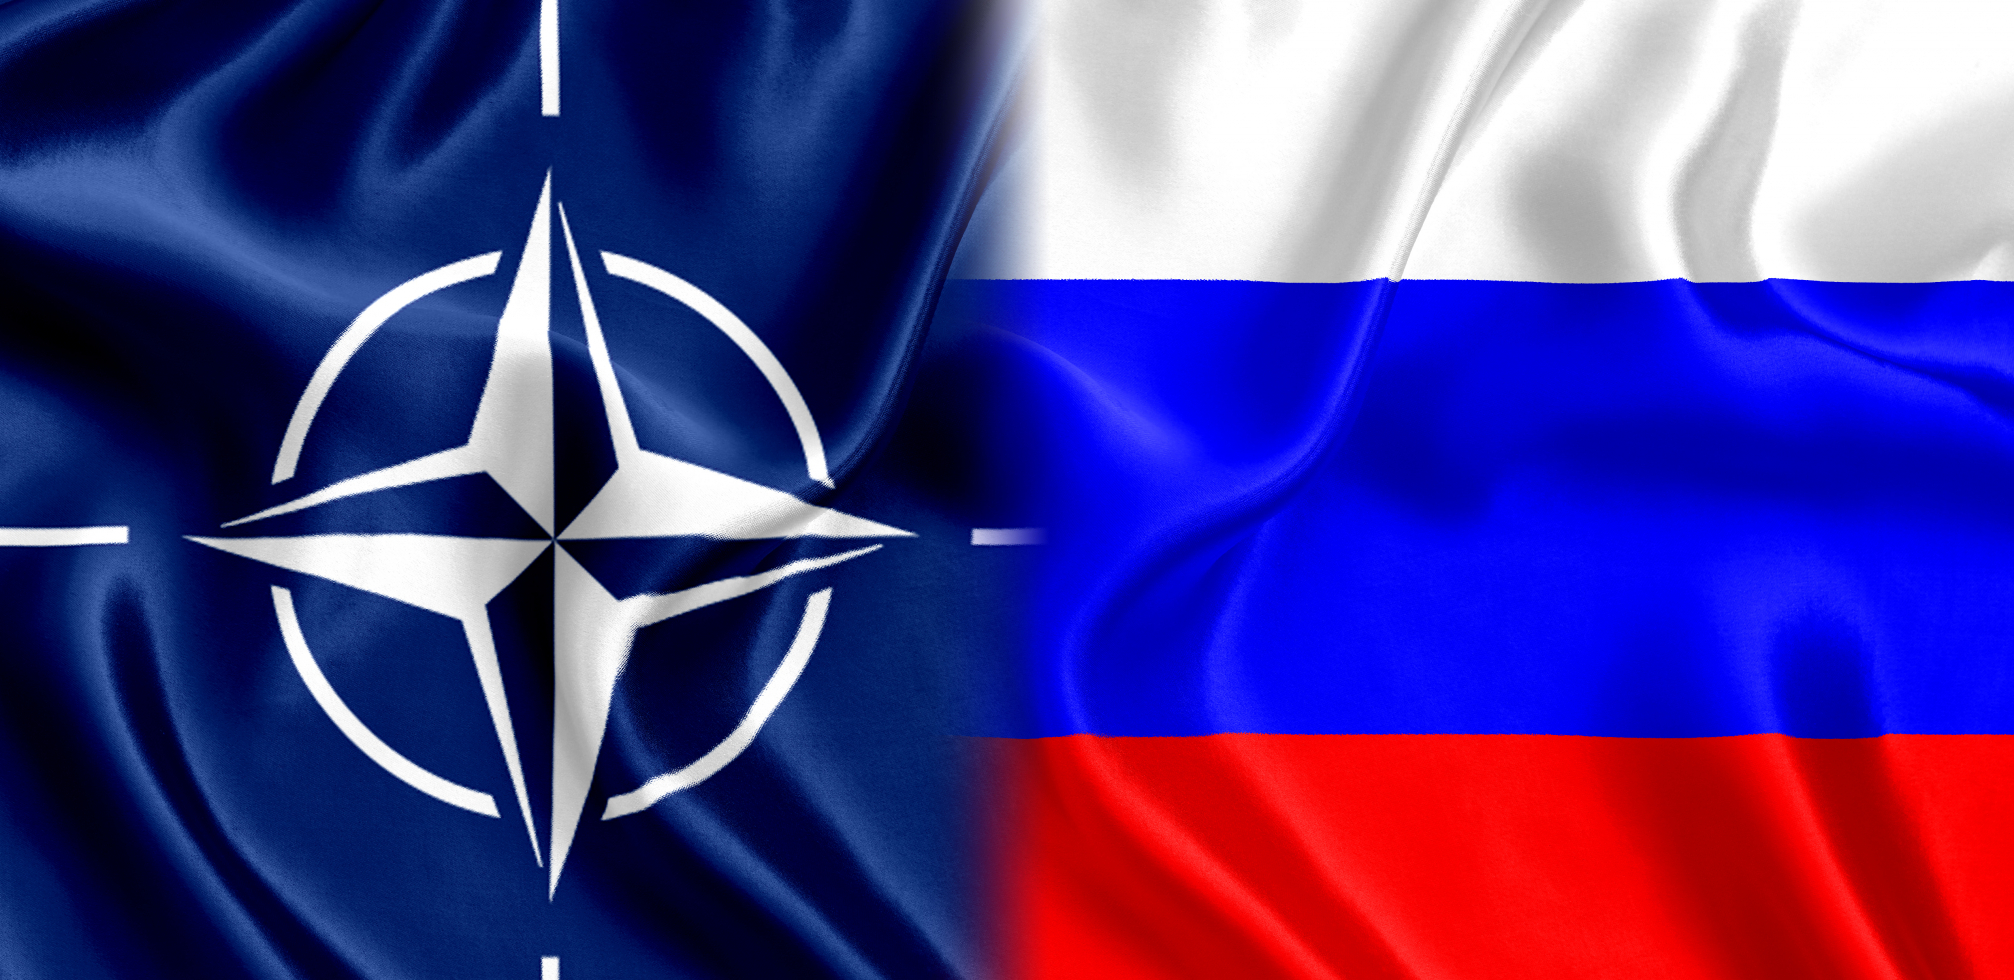 MOSKVA BESNA ZBOG PLANOVA NATO-a  "Izjave Stoltenberga samo potvrđuju njegovu paranoičnu želju"